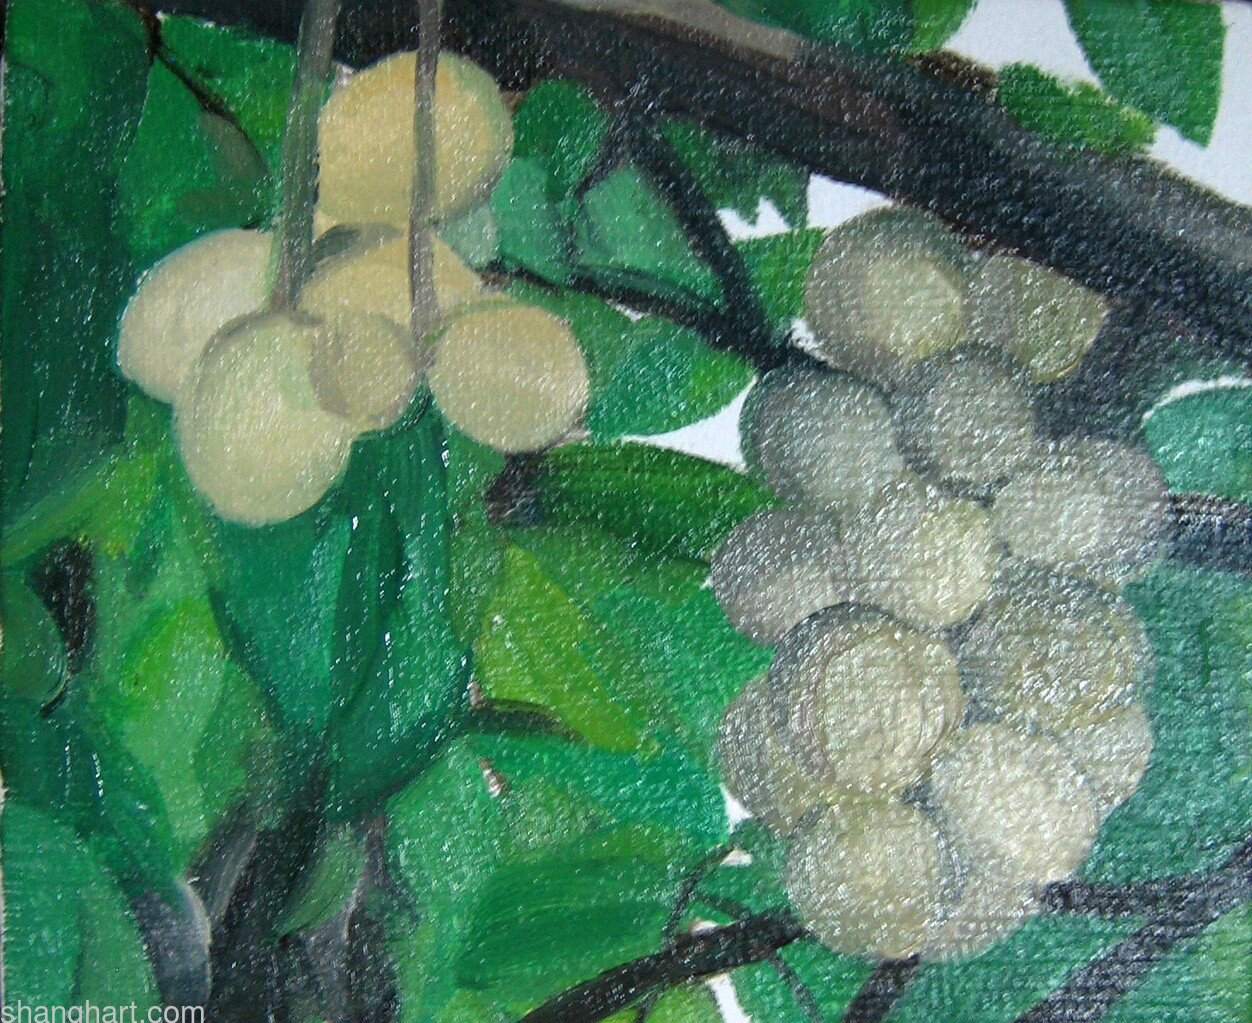 2008, 15x18cm, oil on canvas